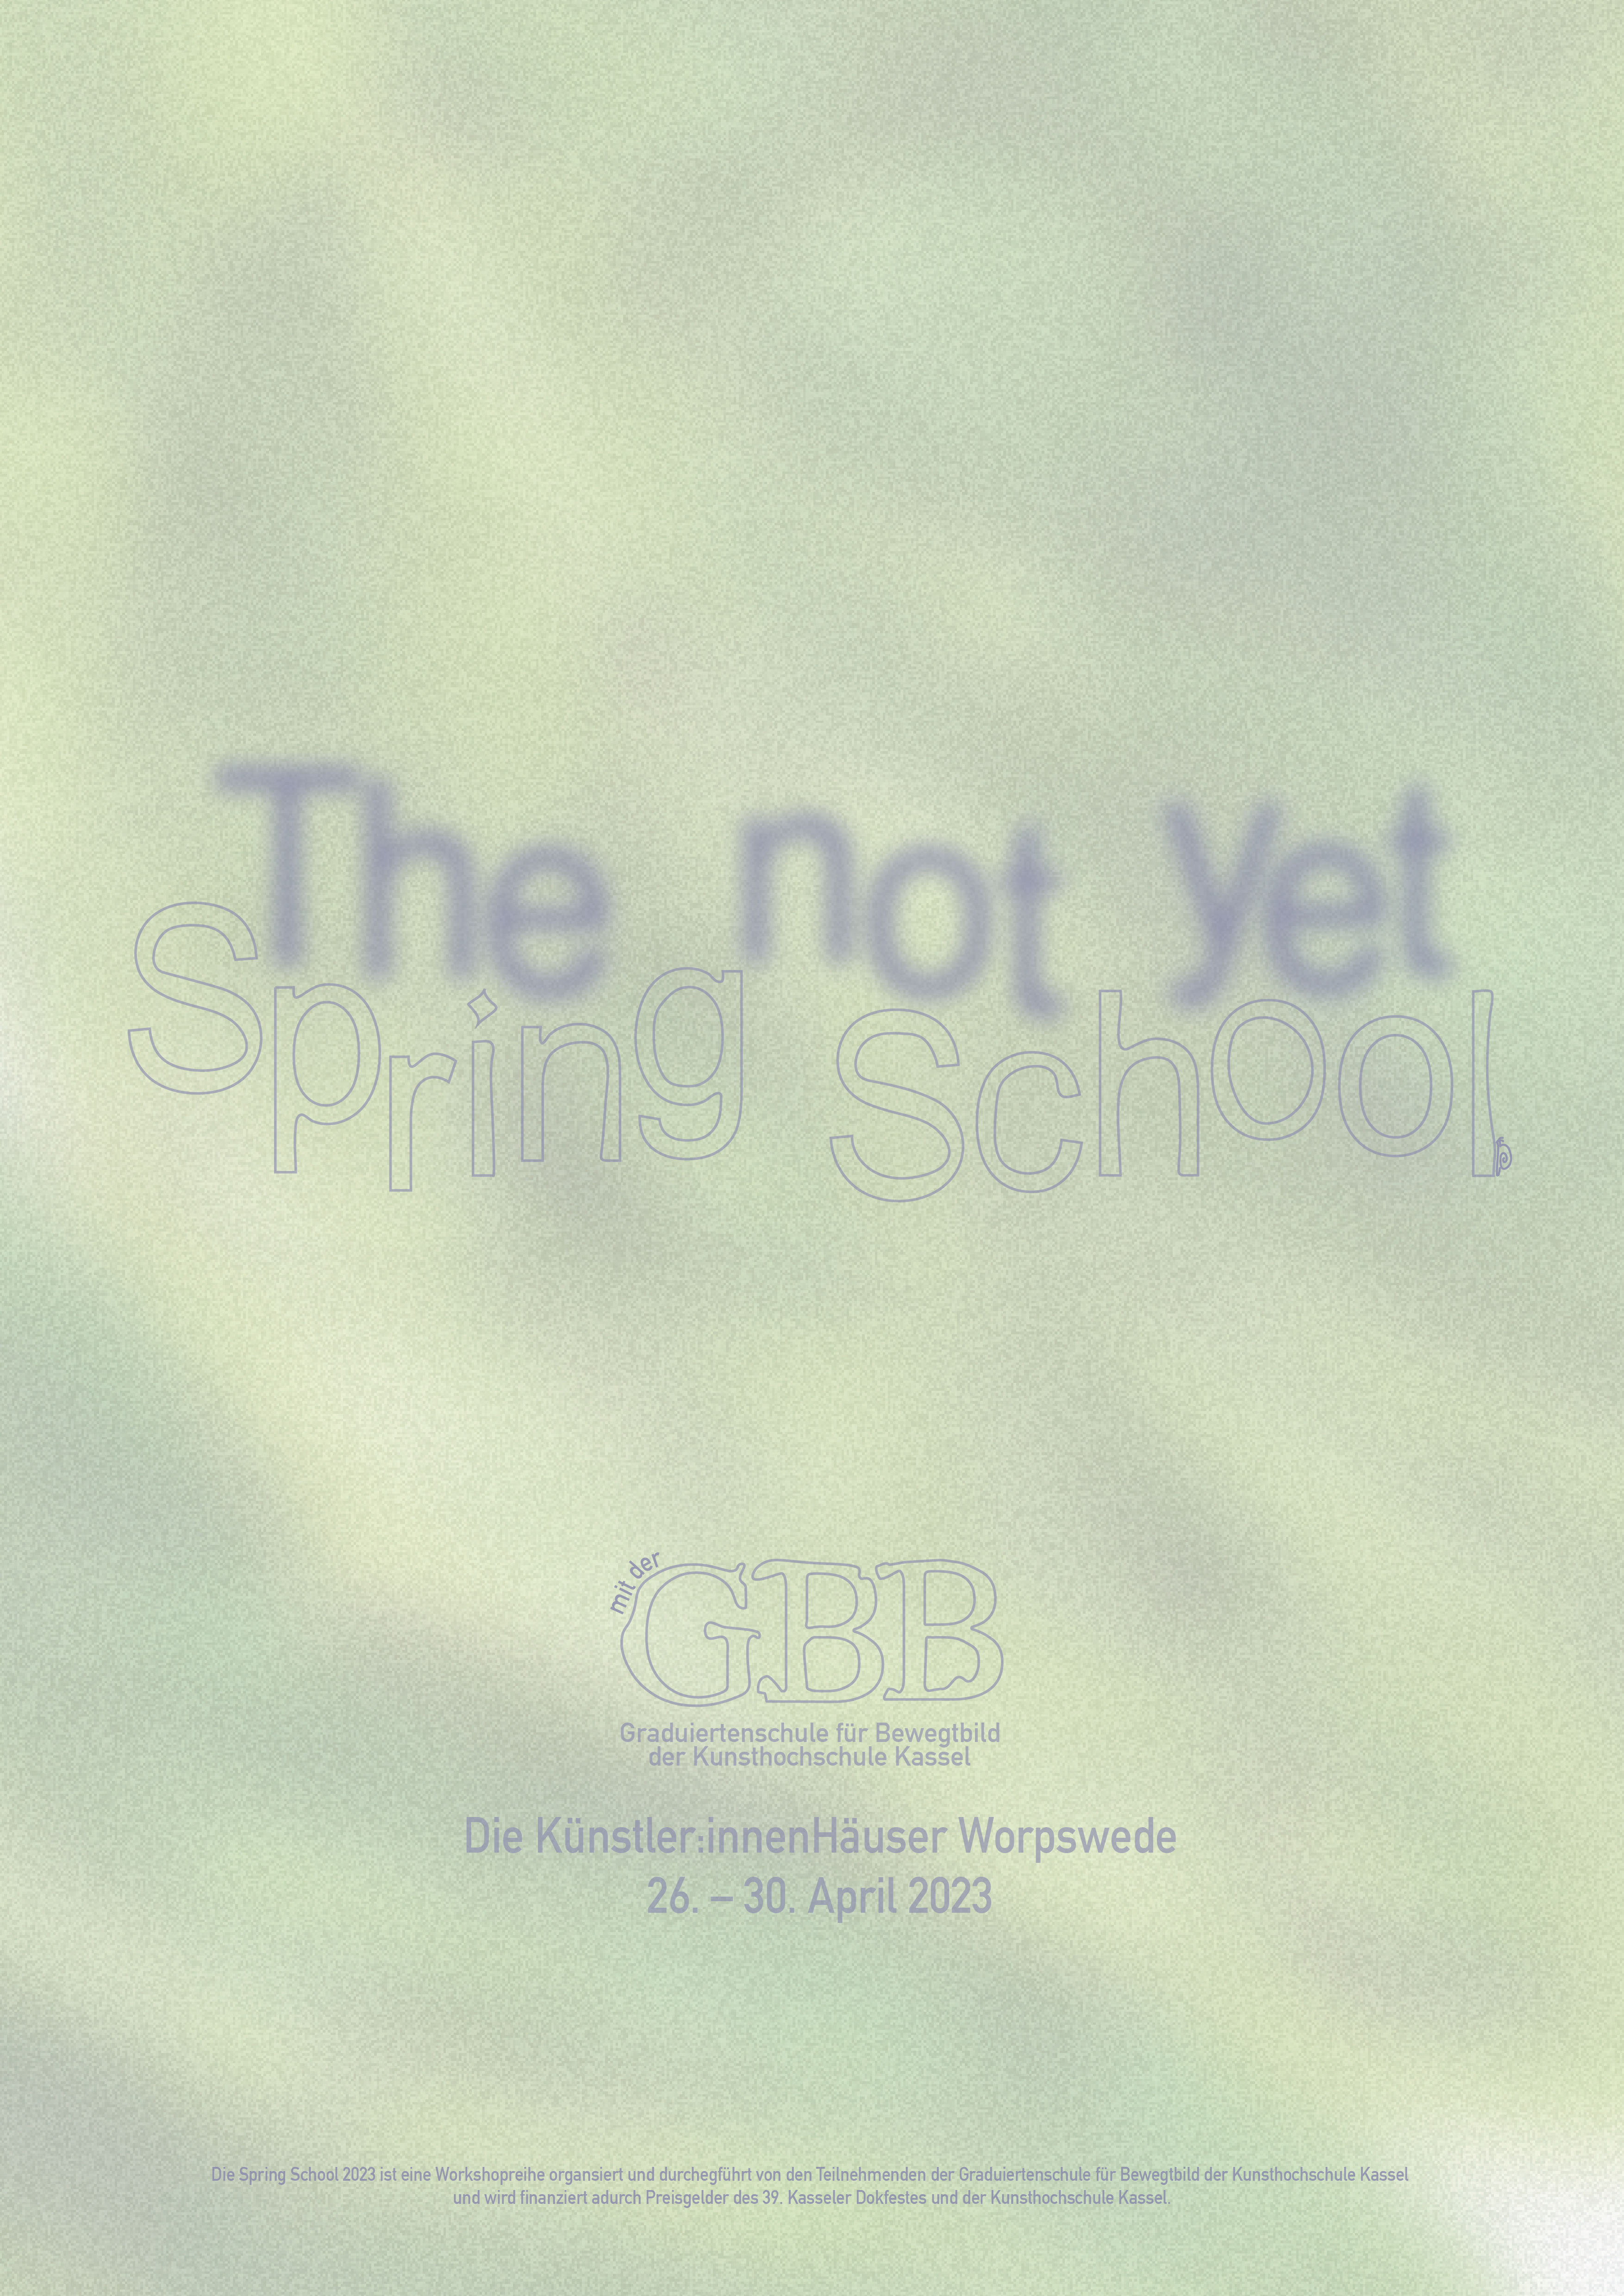 GBB Spring School: The Not Yet